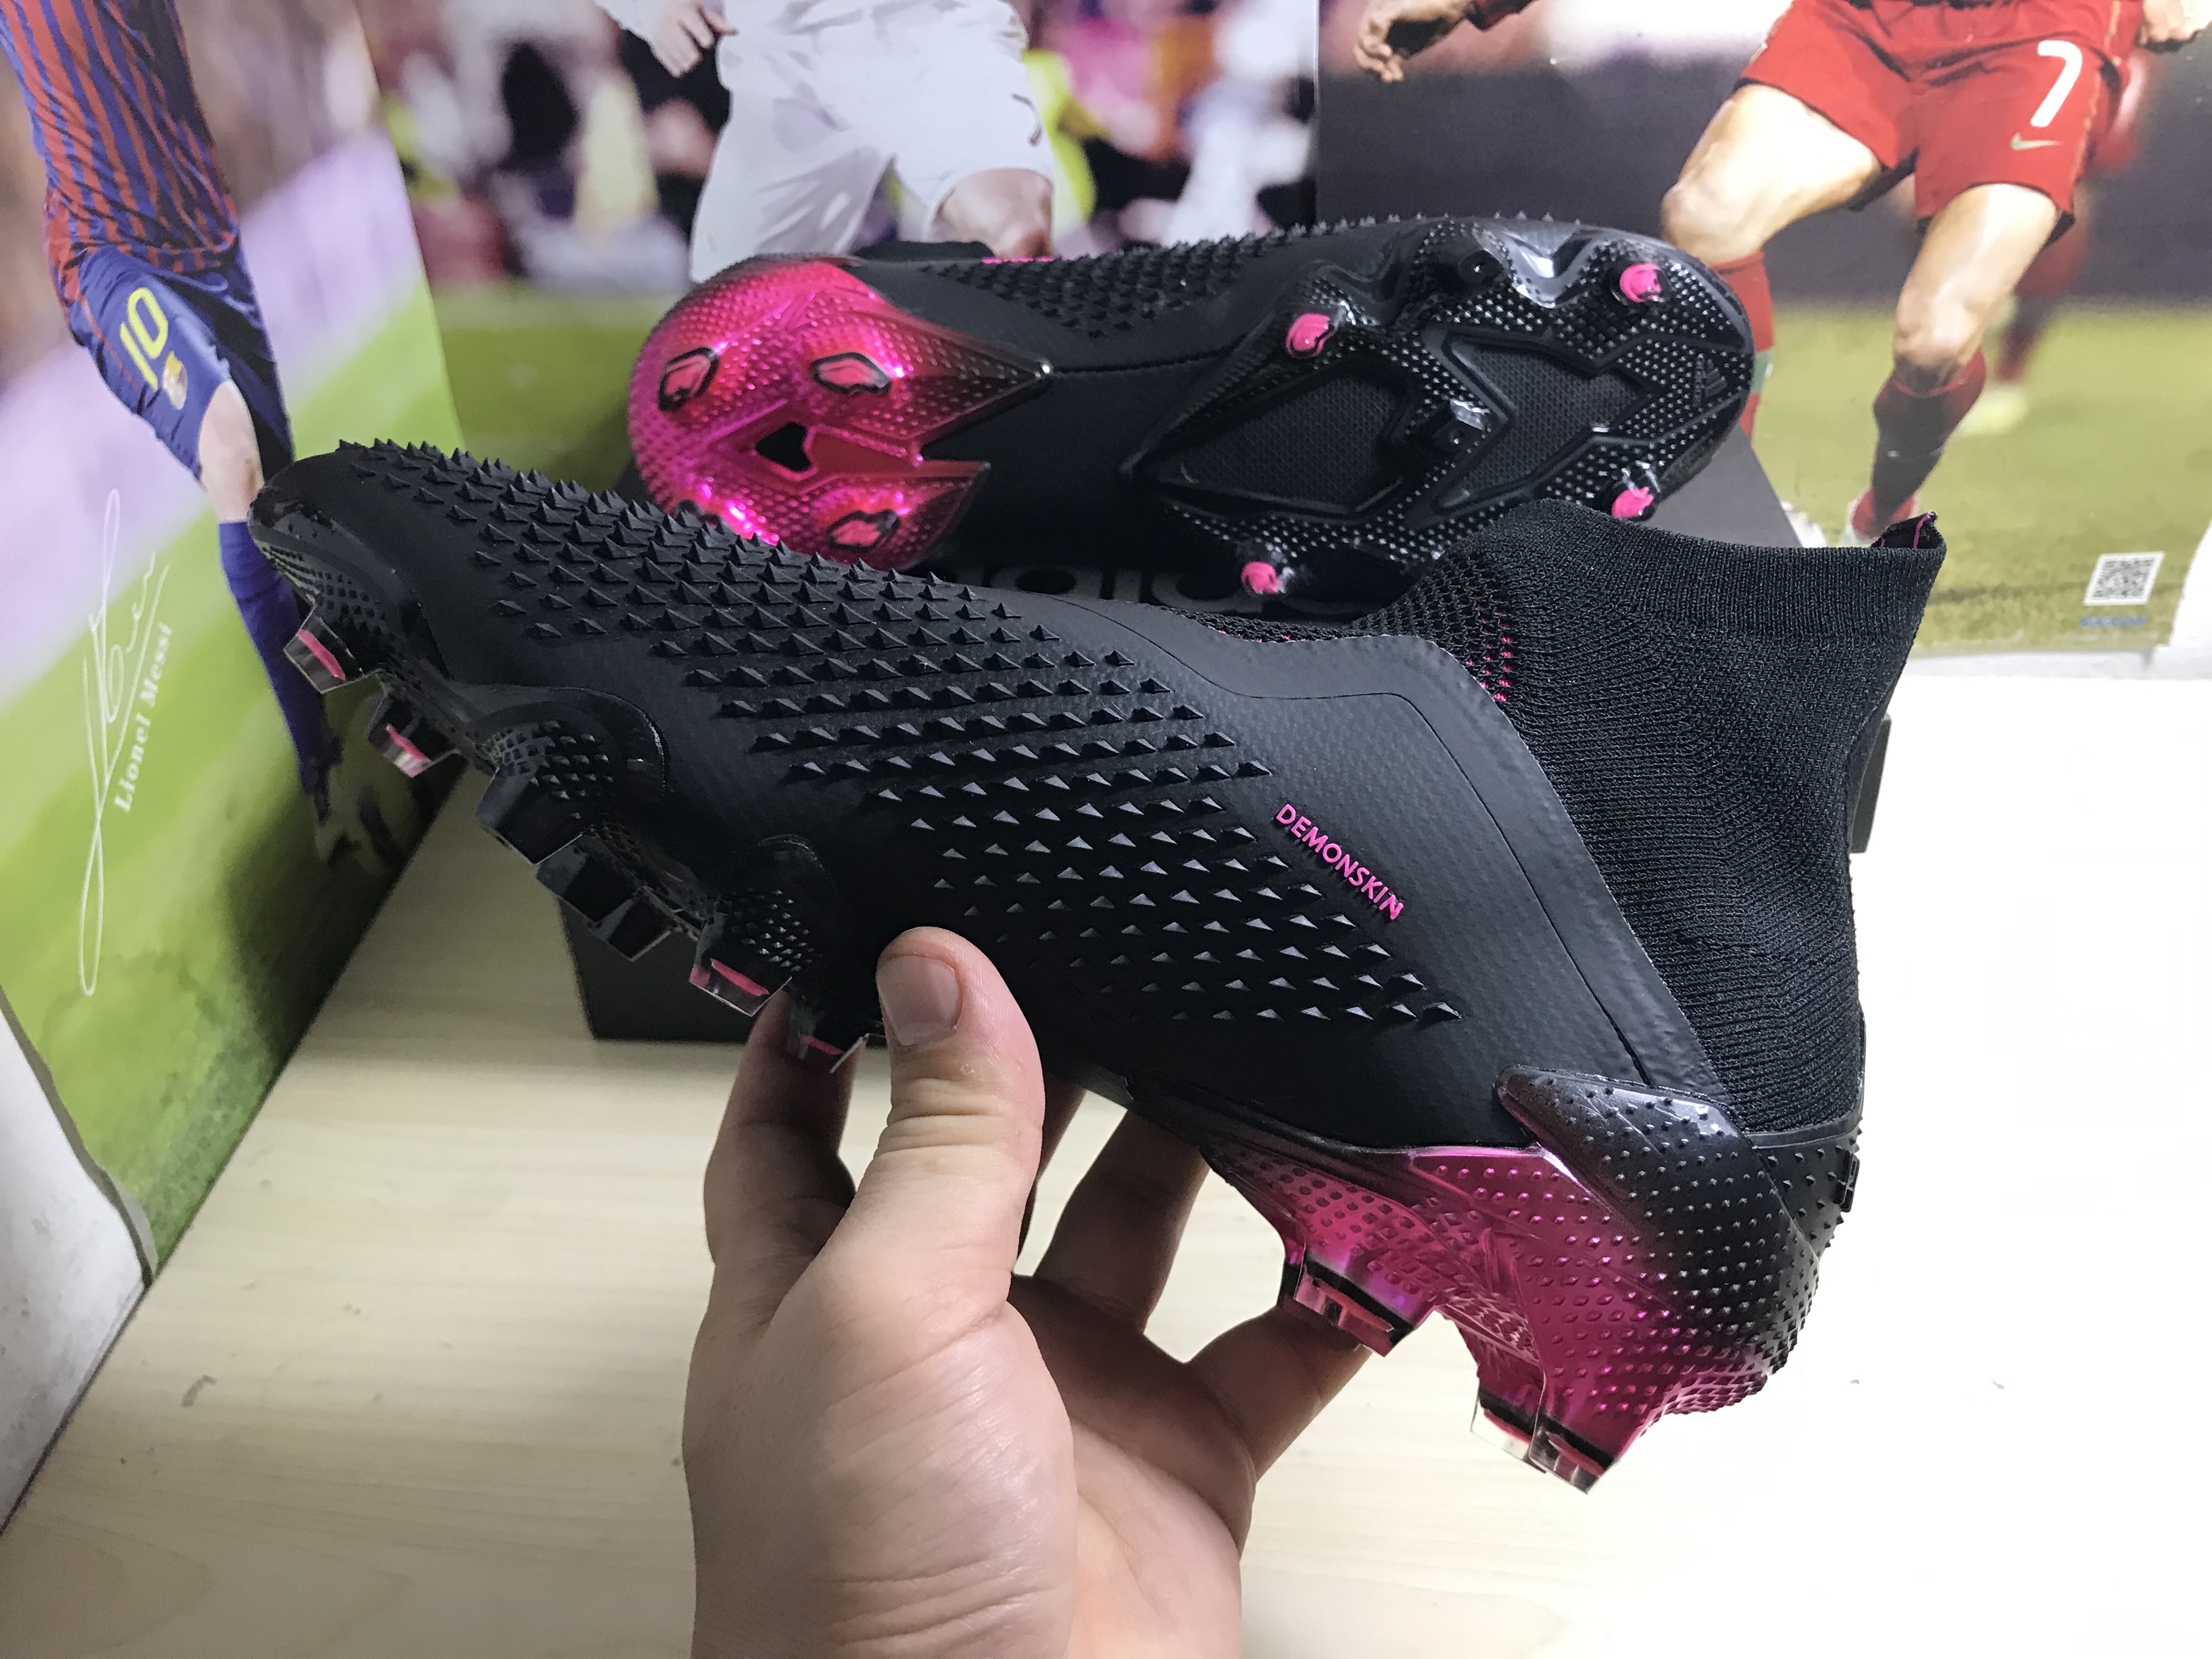 Adidas Predator Mutator 20+ FG 'Core Black Shock Pink' EH2862 - Top Performance Football Boots